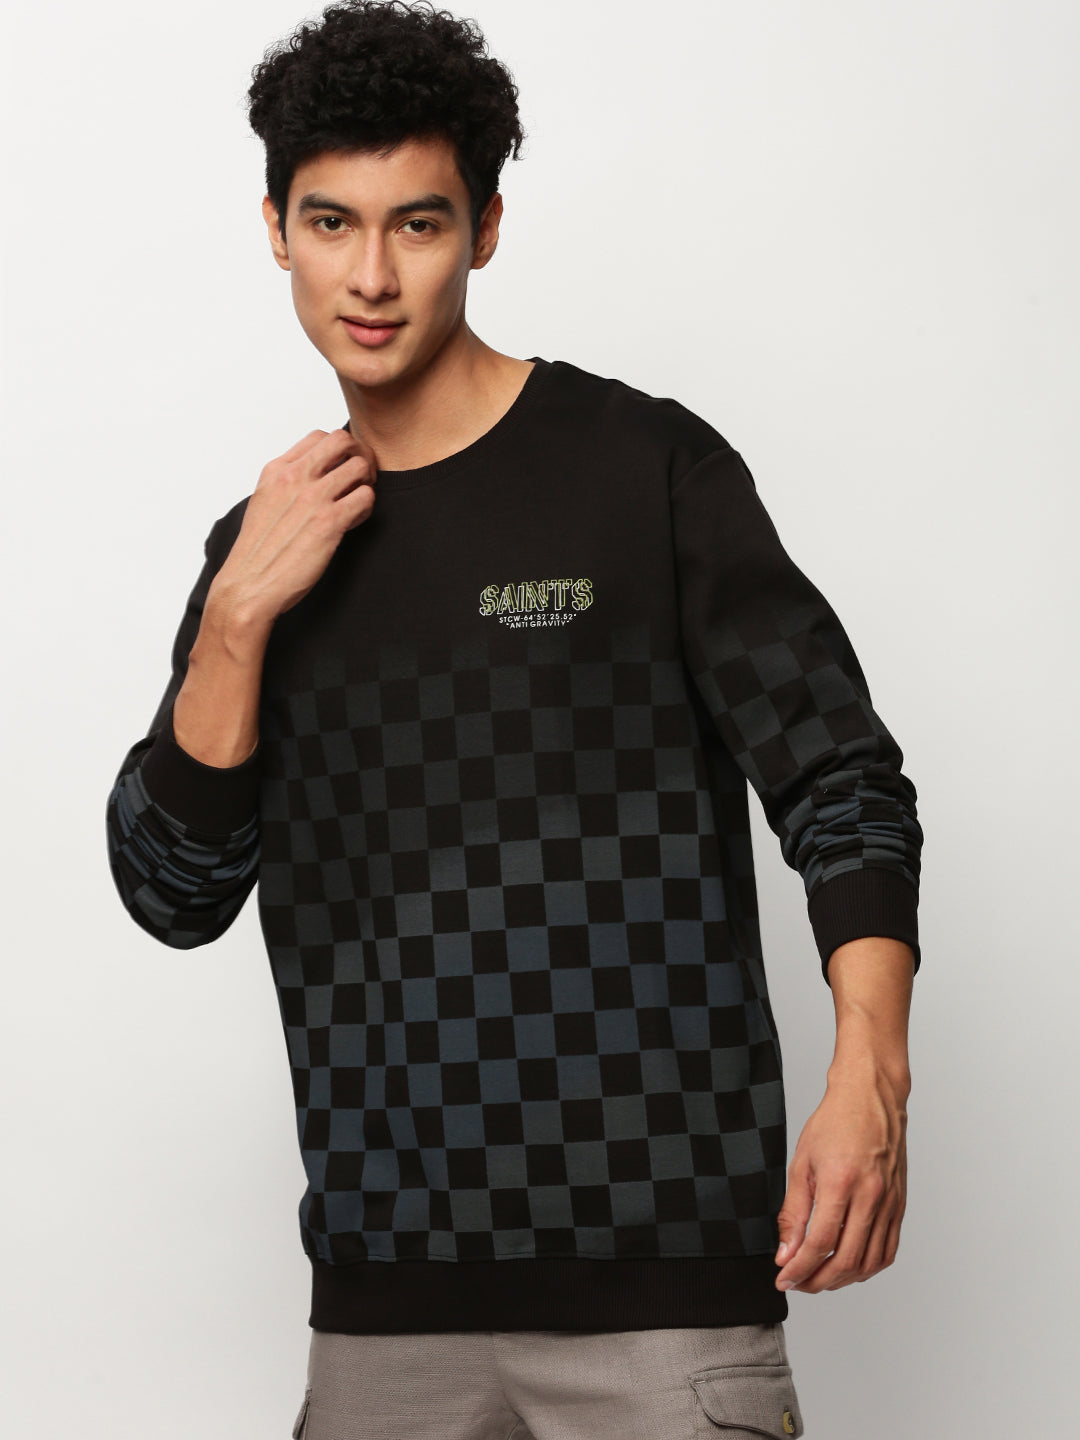 Men Black Geometrical Casual Sweatshirts